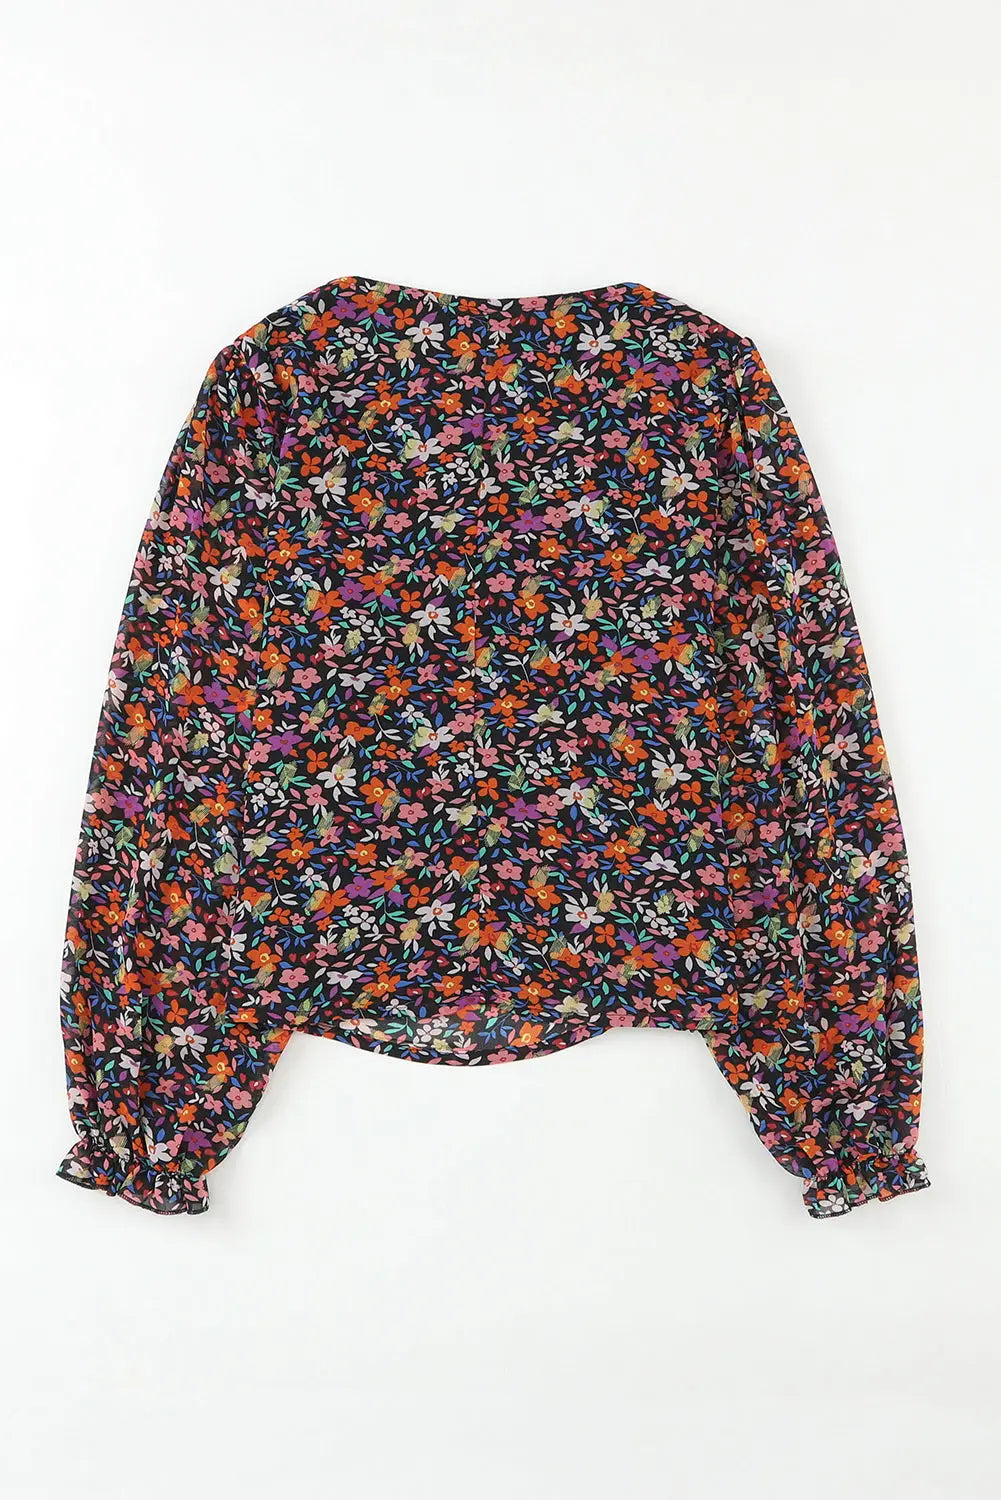 Black v neck bubble sleeve floral blouse - tops